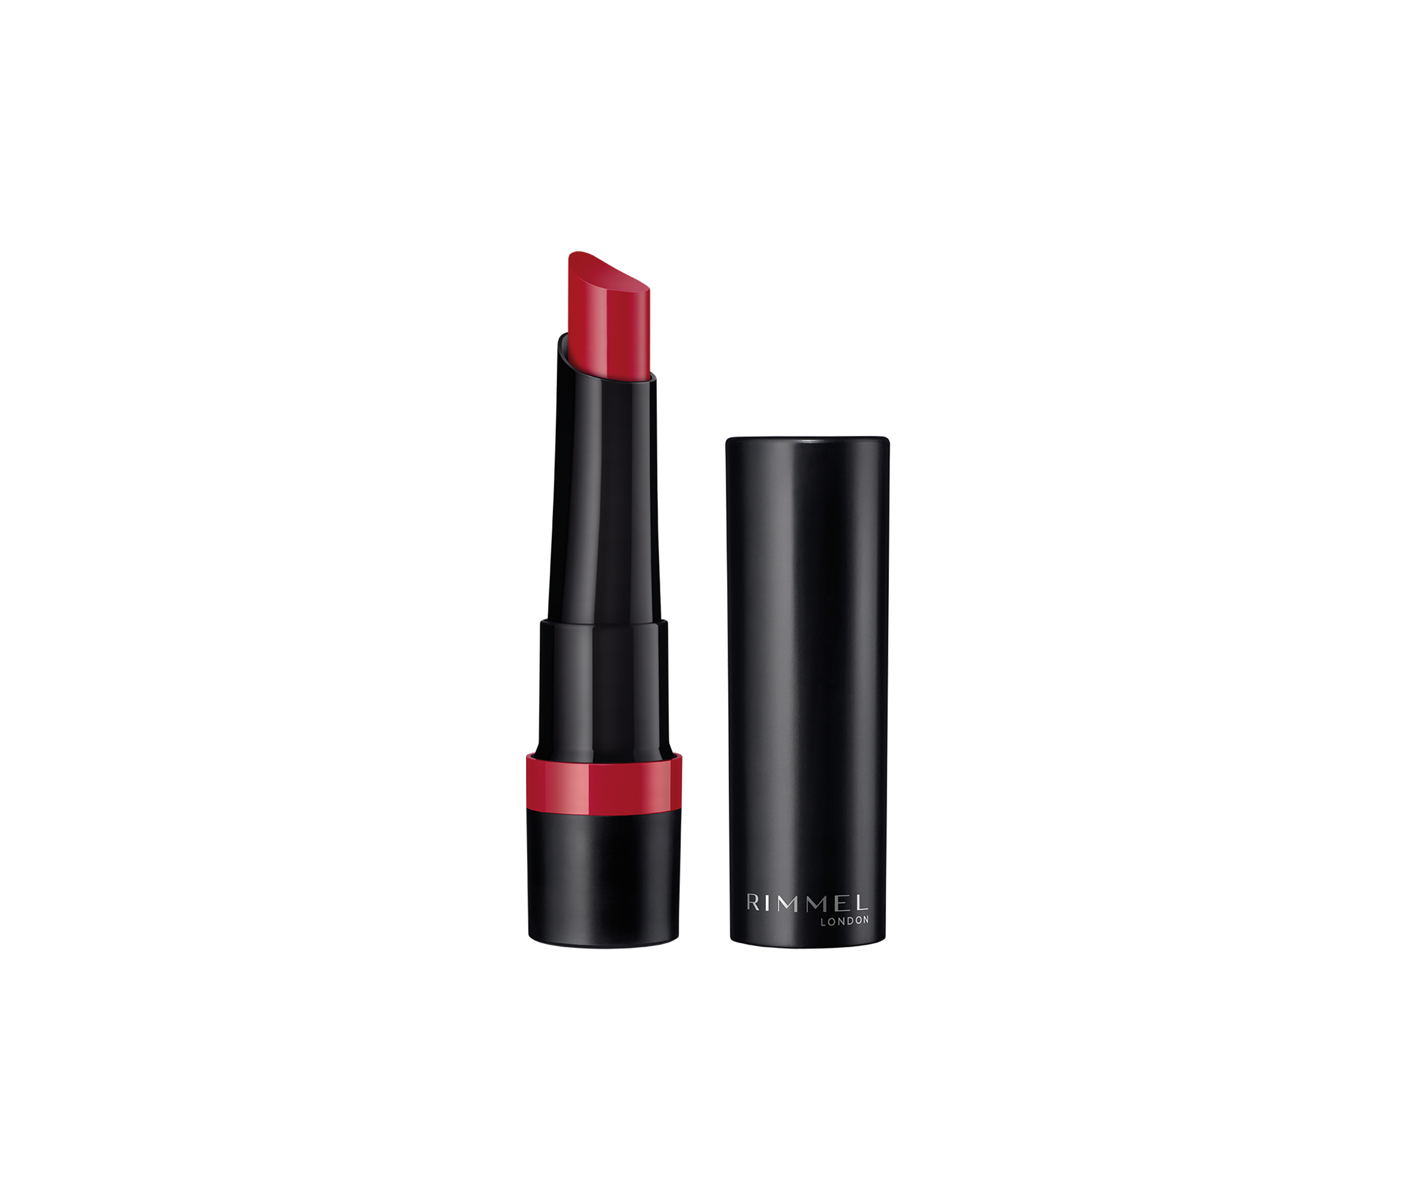 RIMMEL, Extreme Lasting Finish, red lipstick